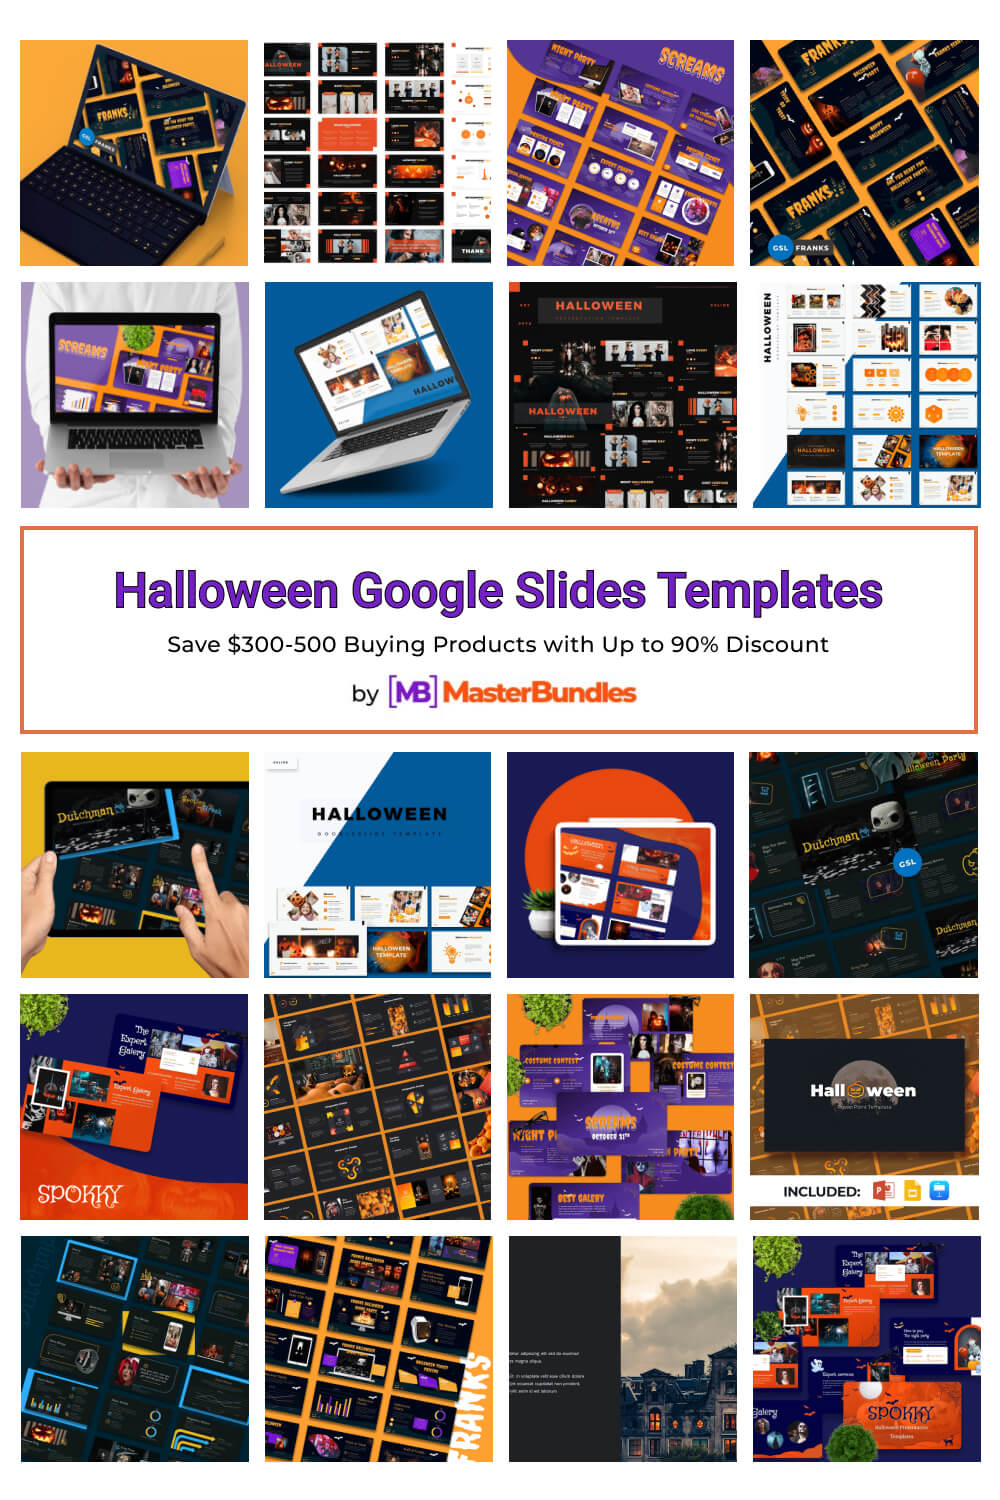 halloween google slides templates pinterest image.